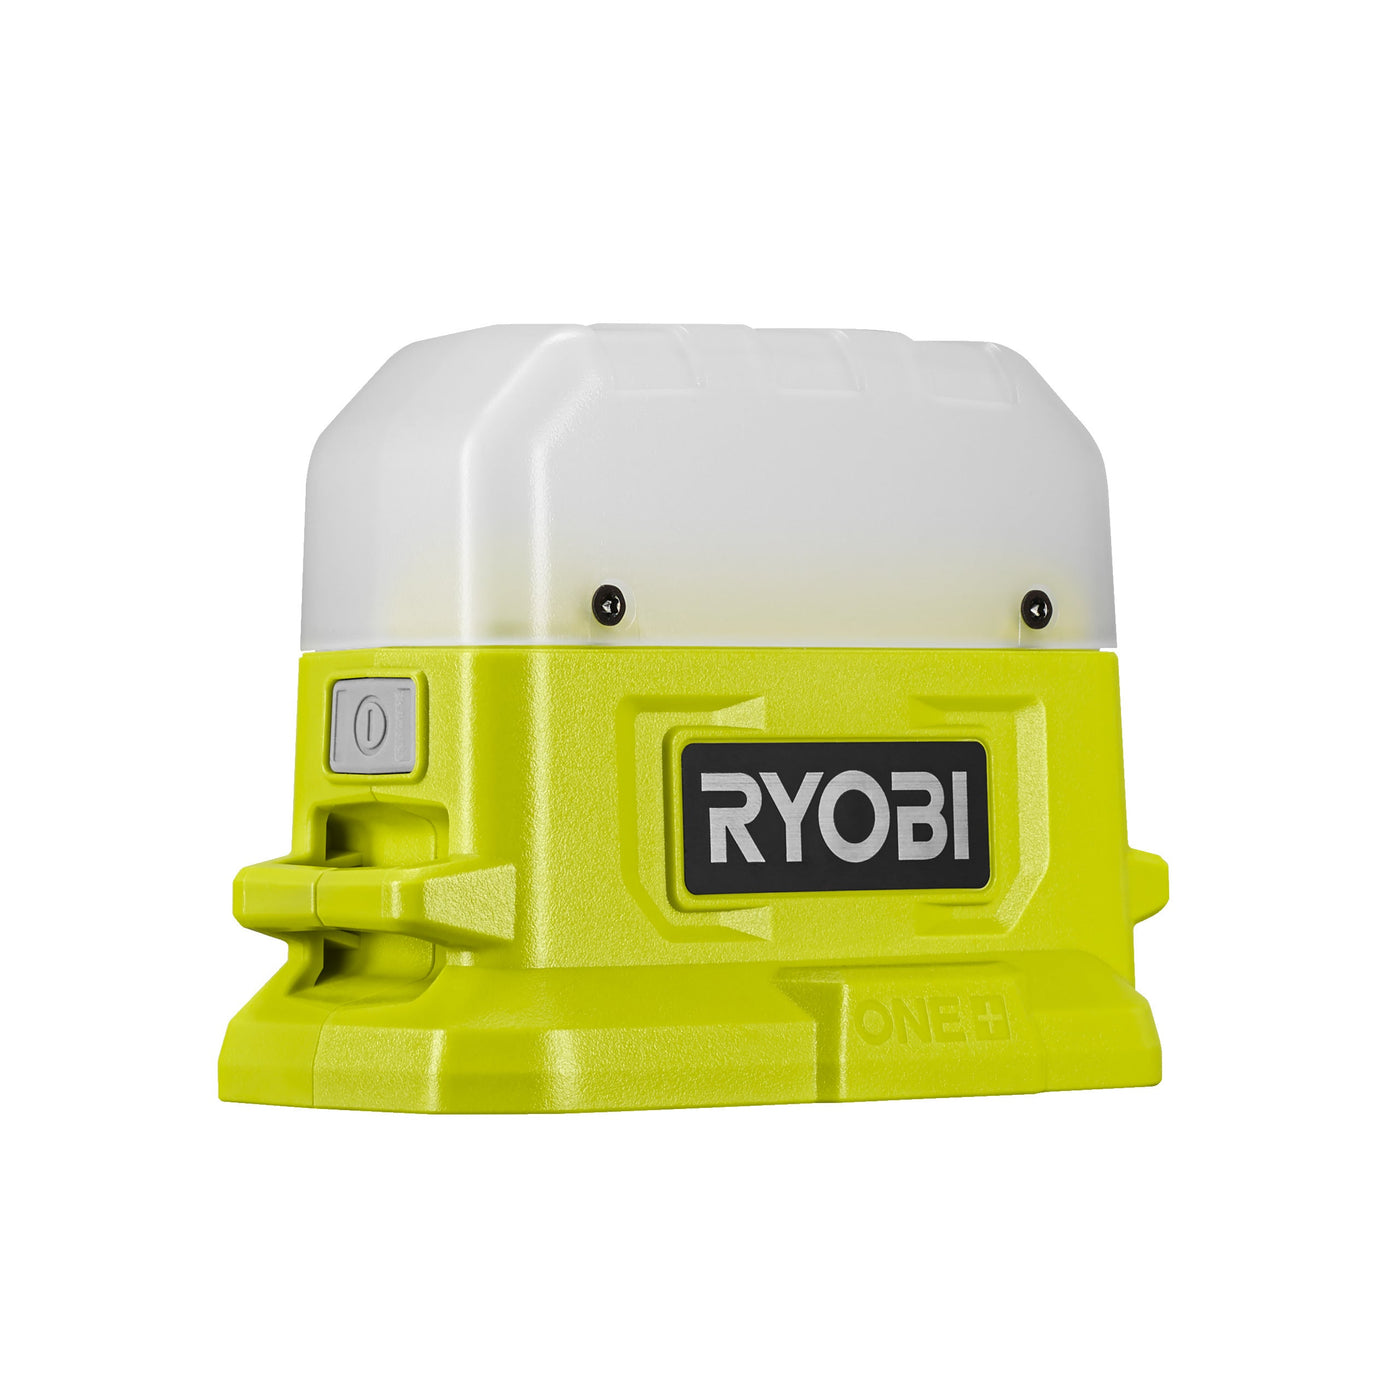 Ryobi RLC18-0 18V ONE+™ Cordless Compact Area Light (Bare Tool)